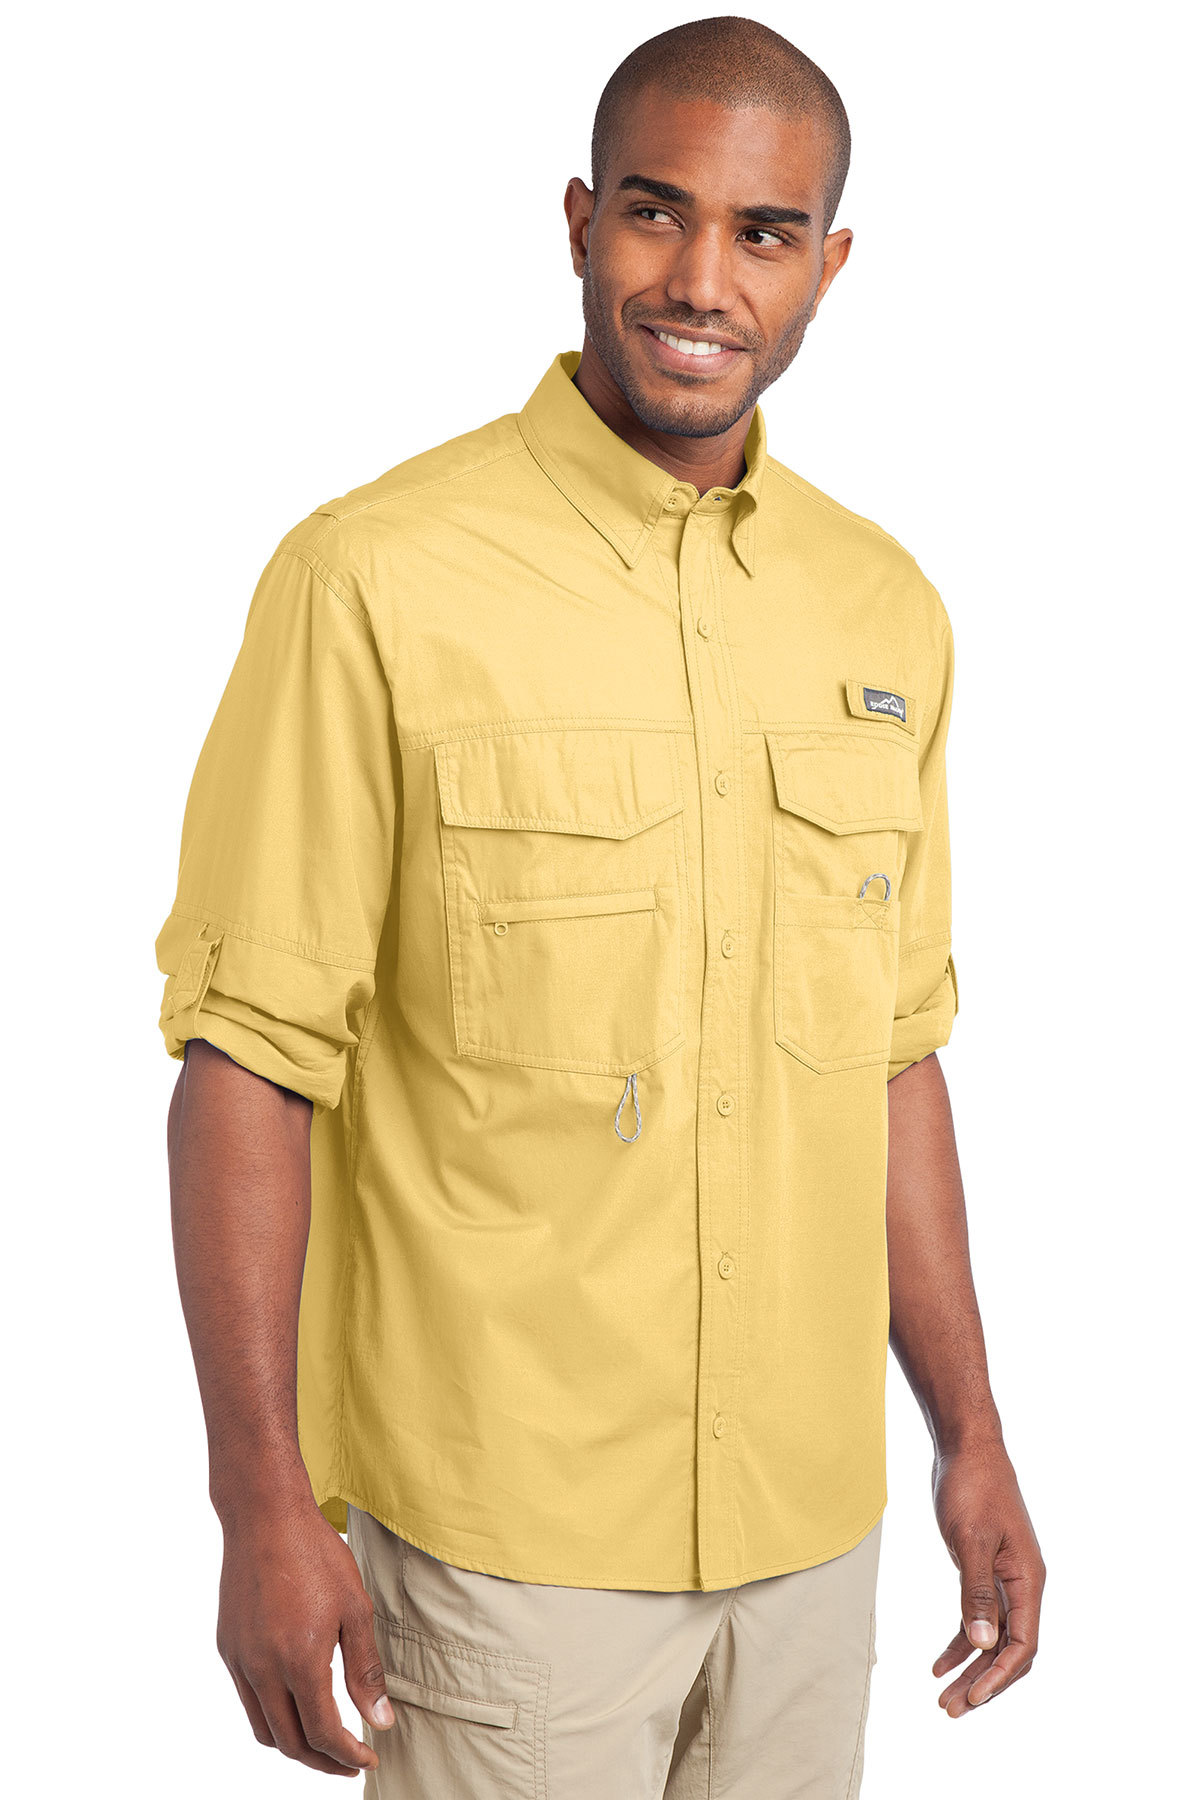 Eddie Bauer - Long Sleeve Fishing Shirt | Product | SanMar